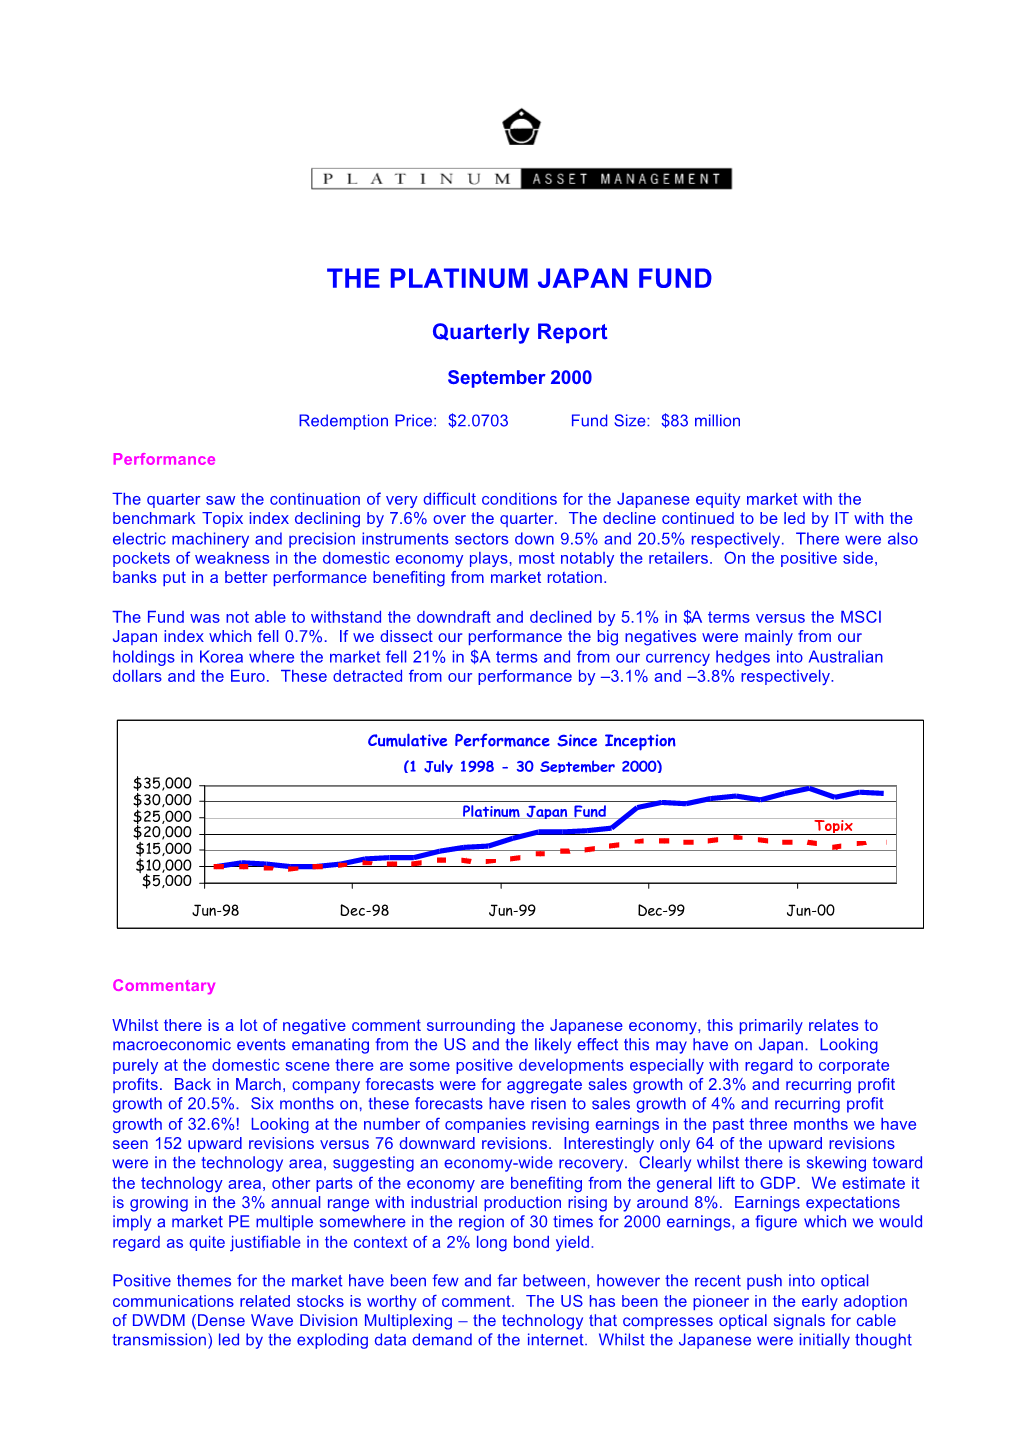 The Platinum Japan Fund